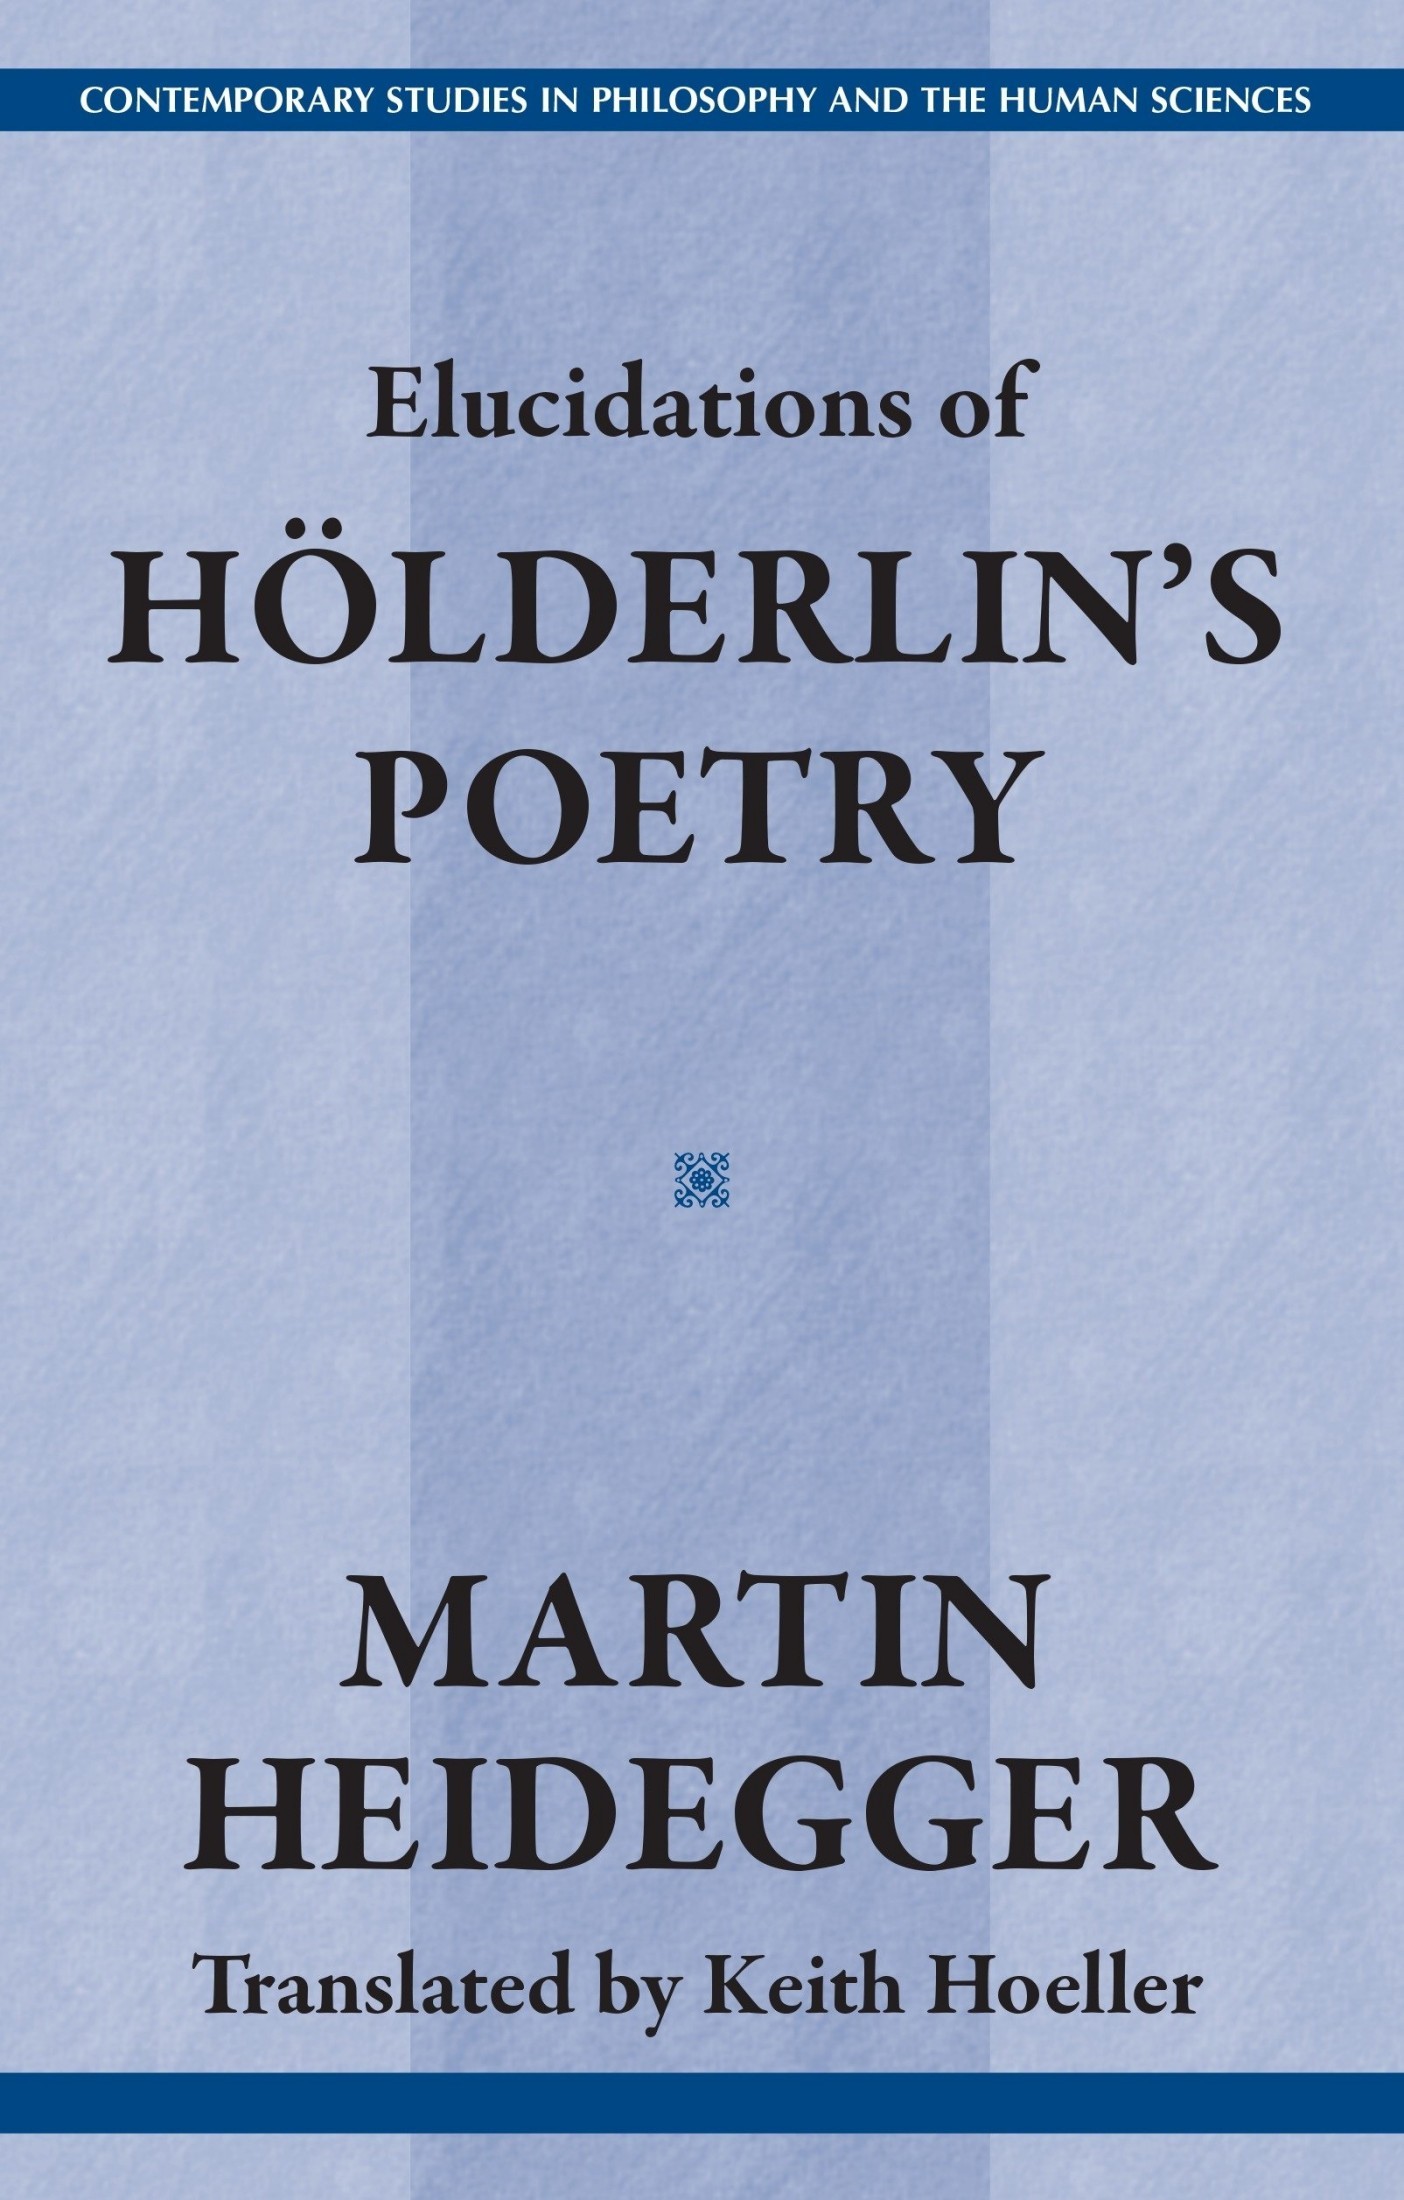 Elucidations of Hölderlin's poetry